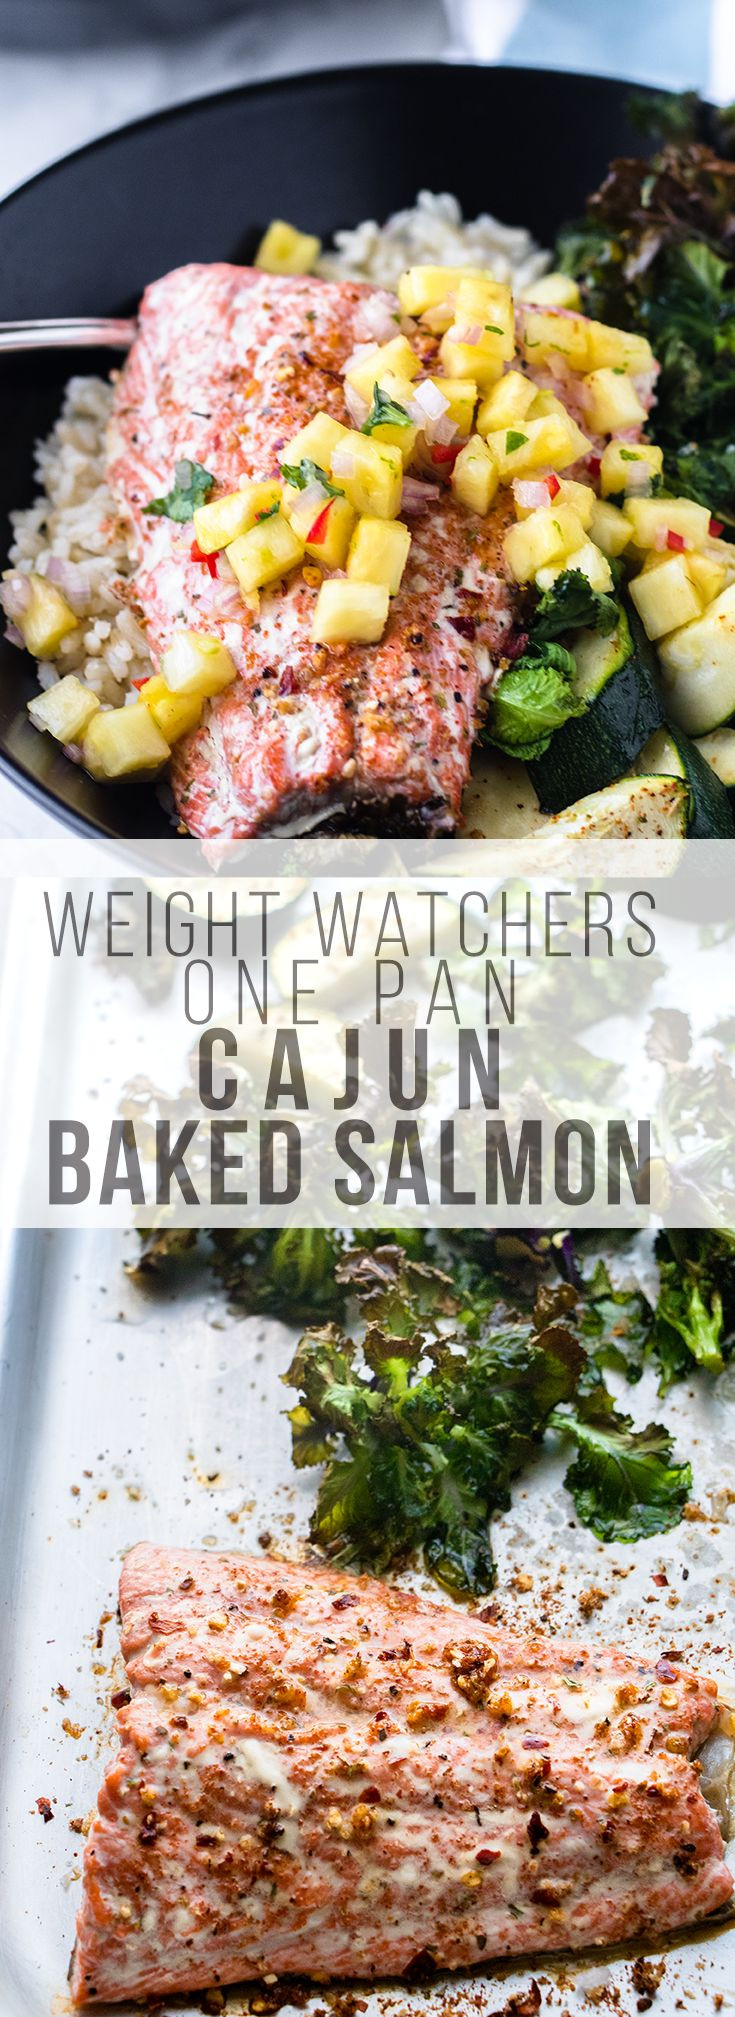 Weight Watchers Fish Recipes
 The 25 best Weight watchers salmon ideas on Pinterest